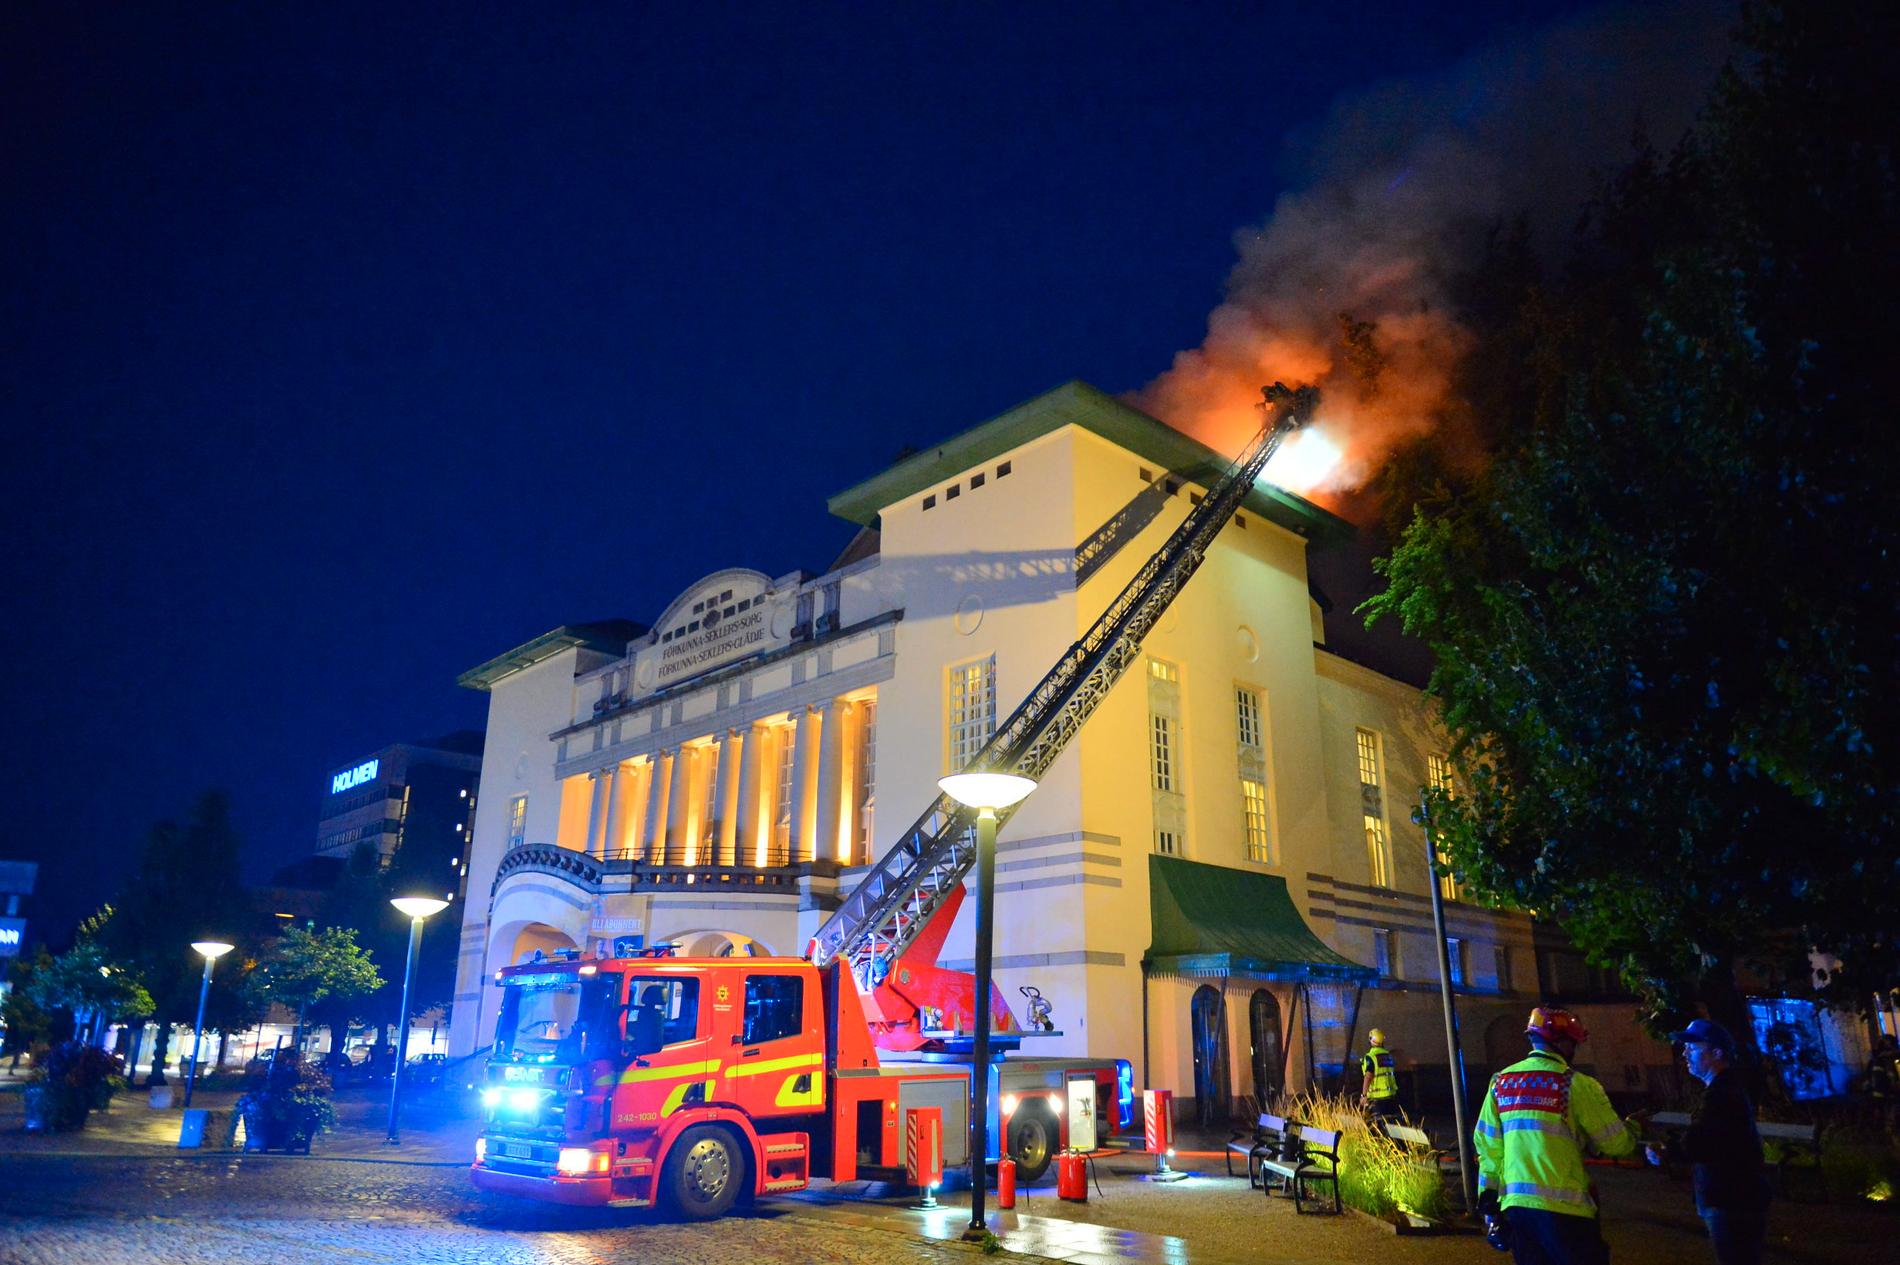 En kraftig brand har brutit ut i Östgötateaterns lokaler i Norrköping.